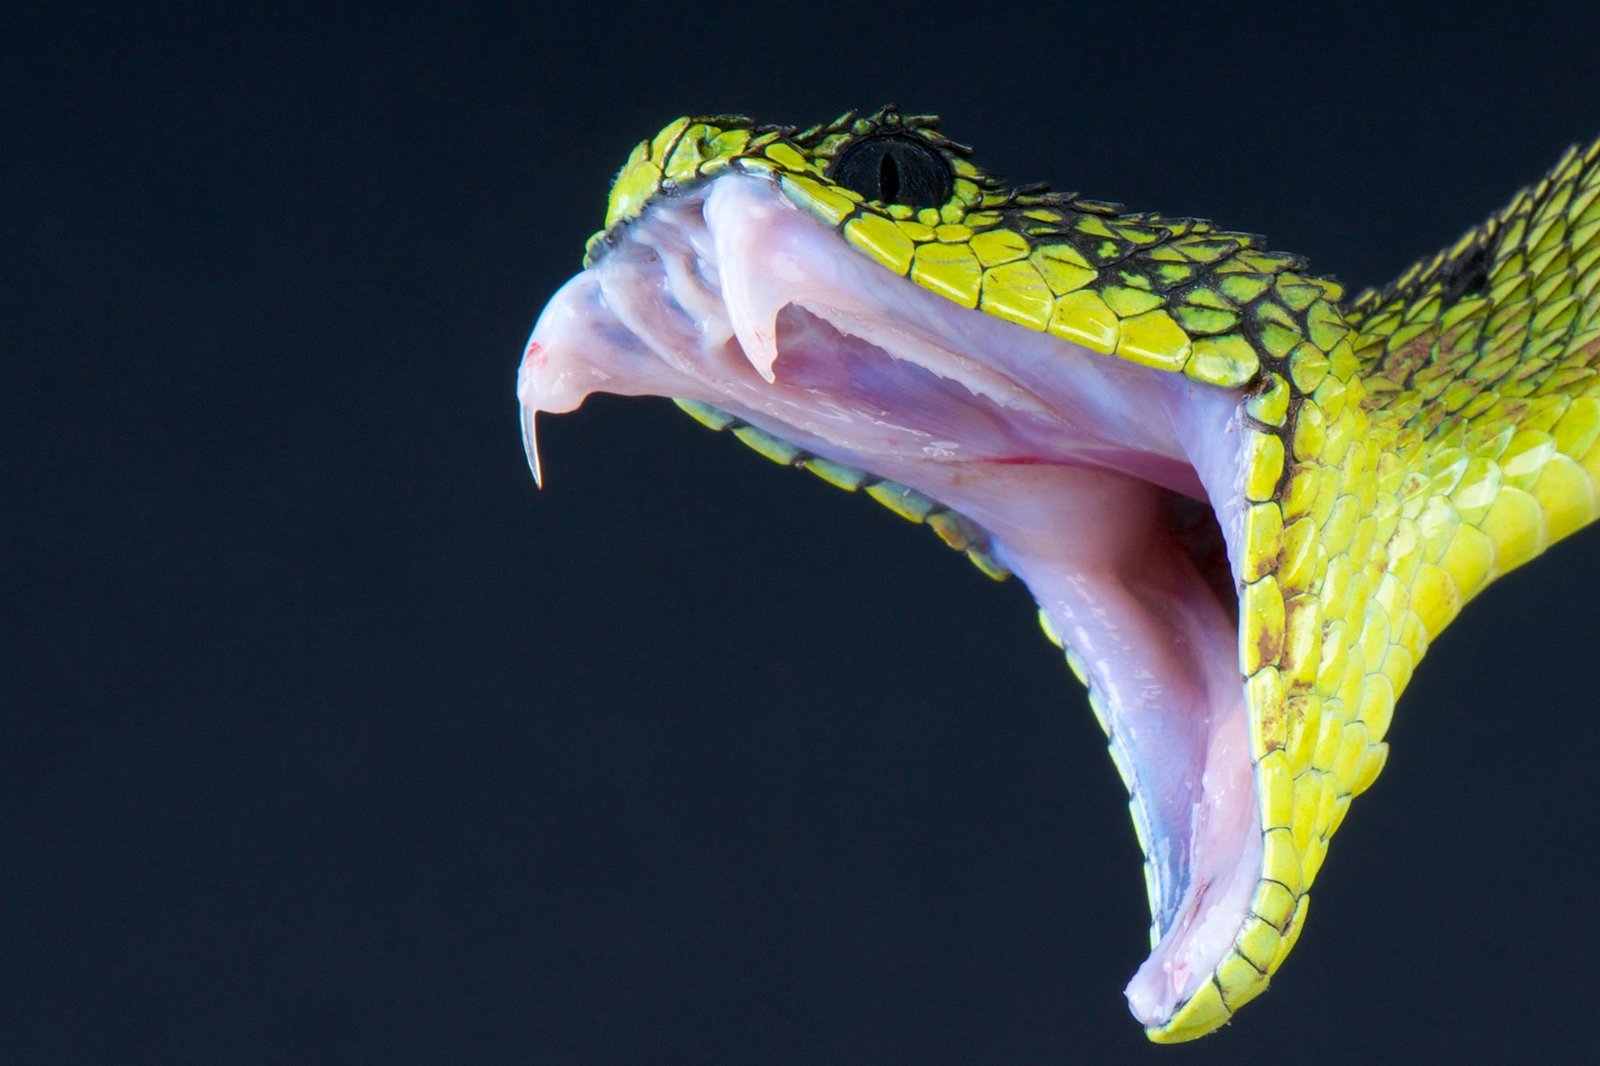 Snake Venom Research Breakthrough Using 3D Model of Imitation Blood Vessels